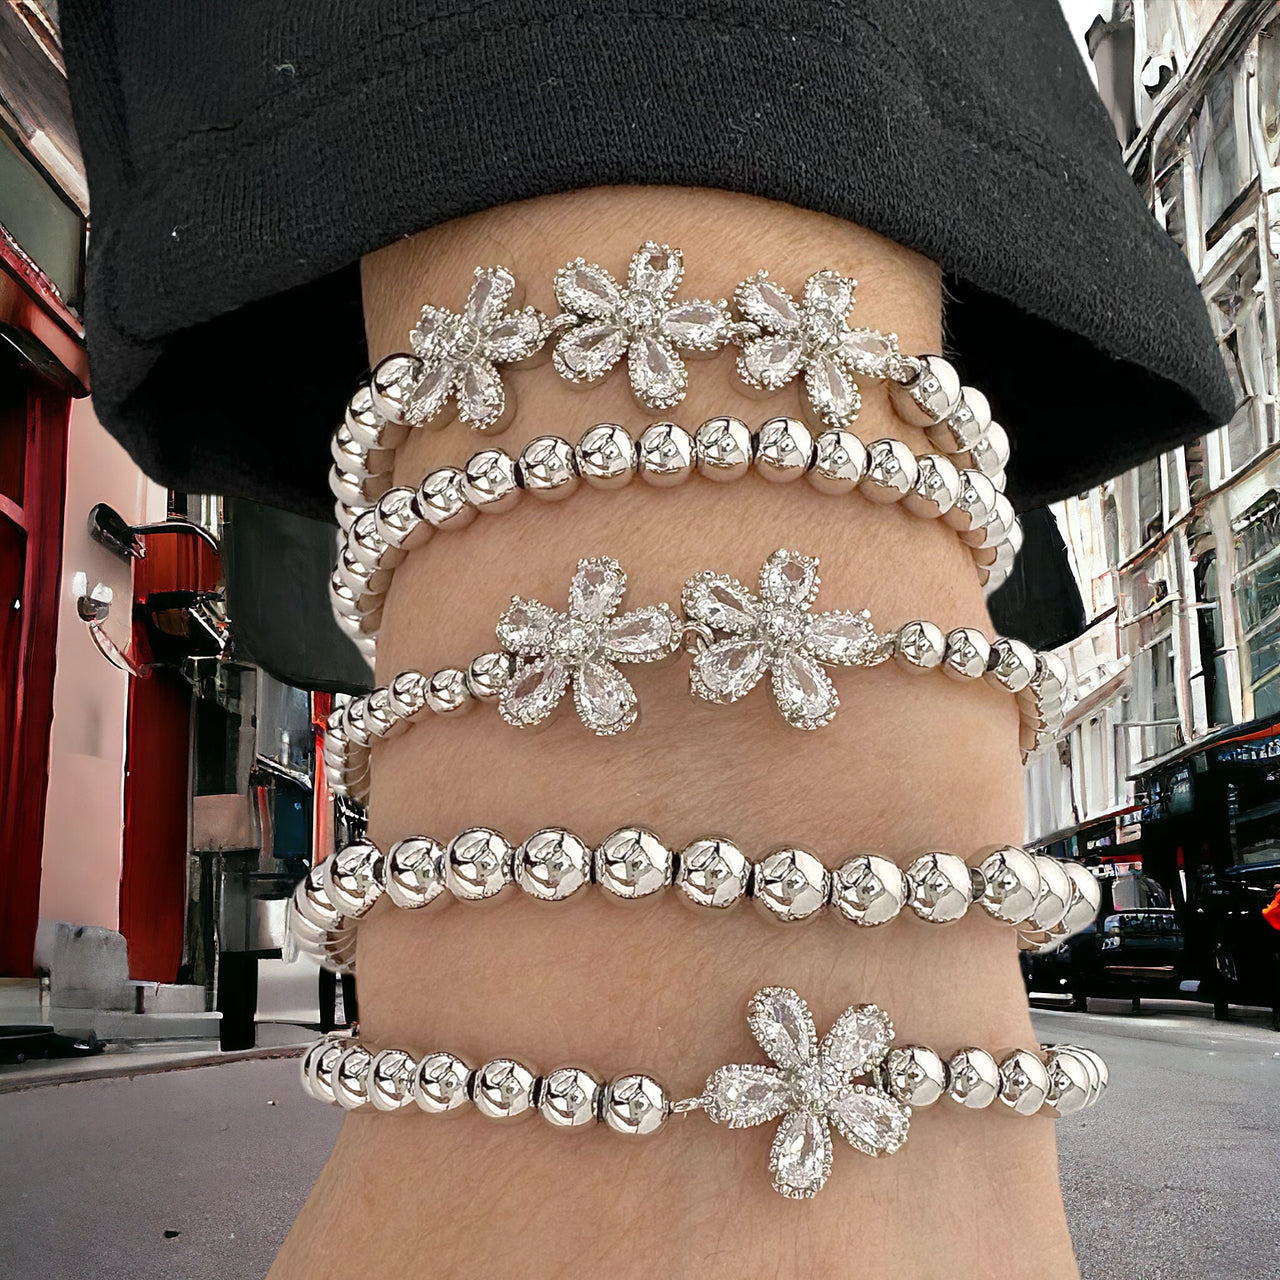 Felicity Floral Collection of Bracelets